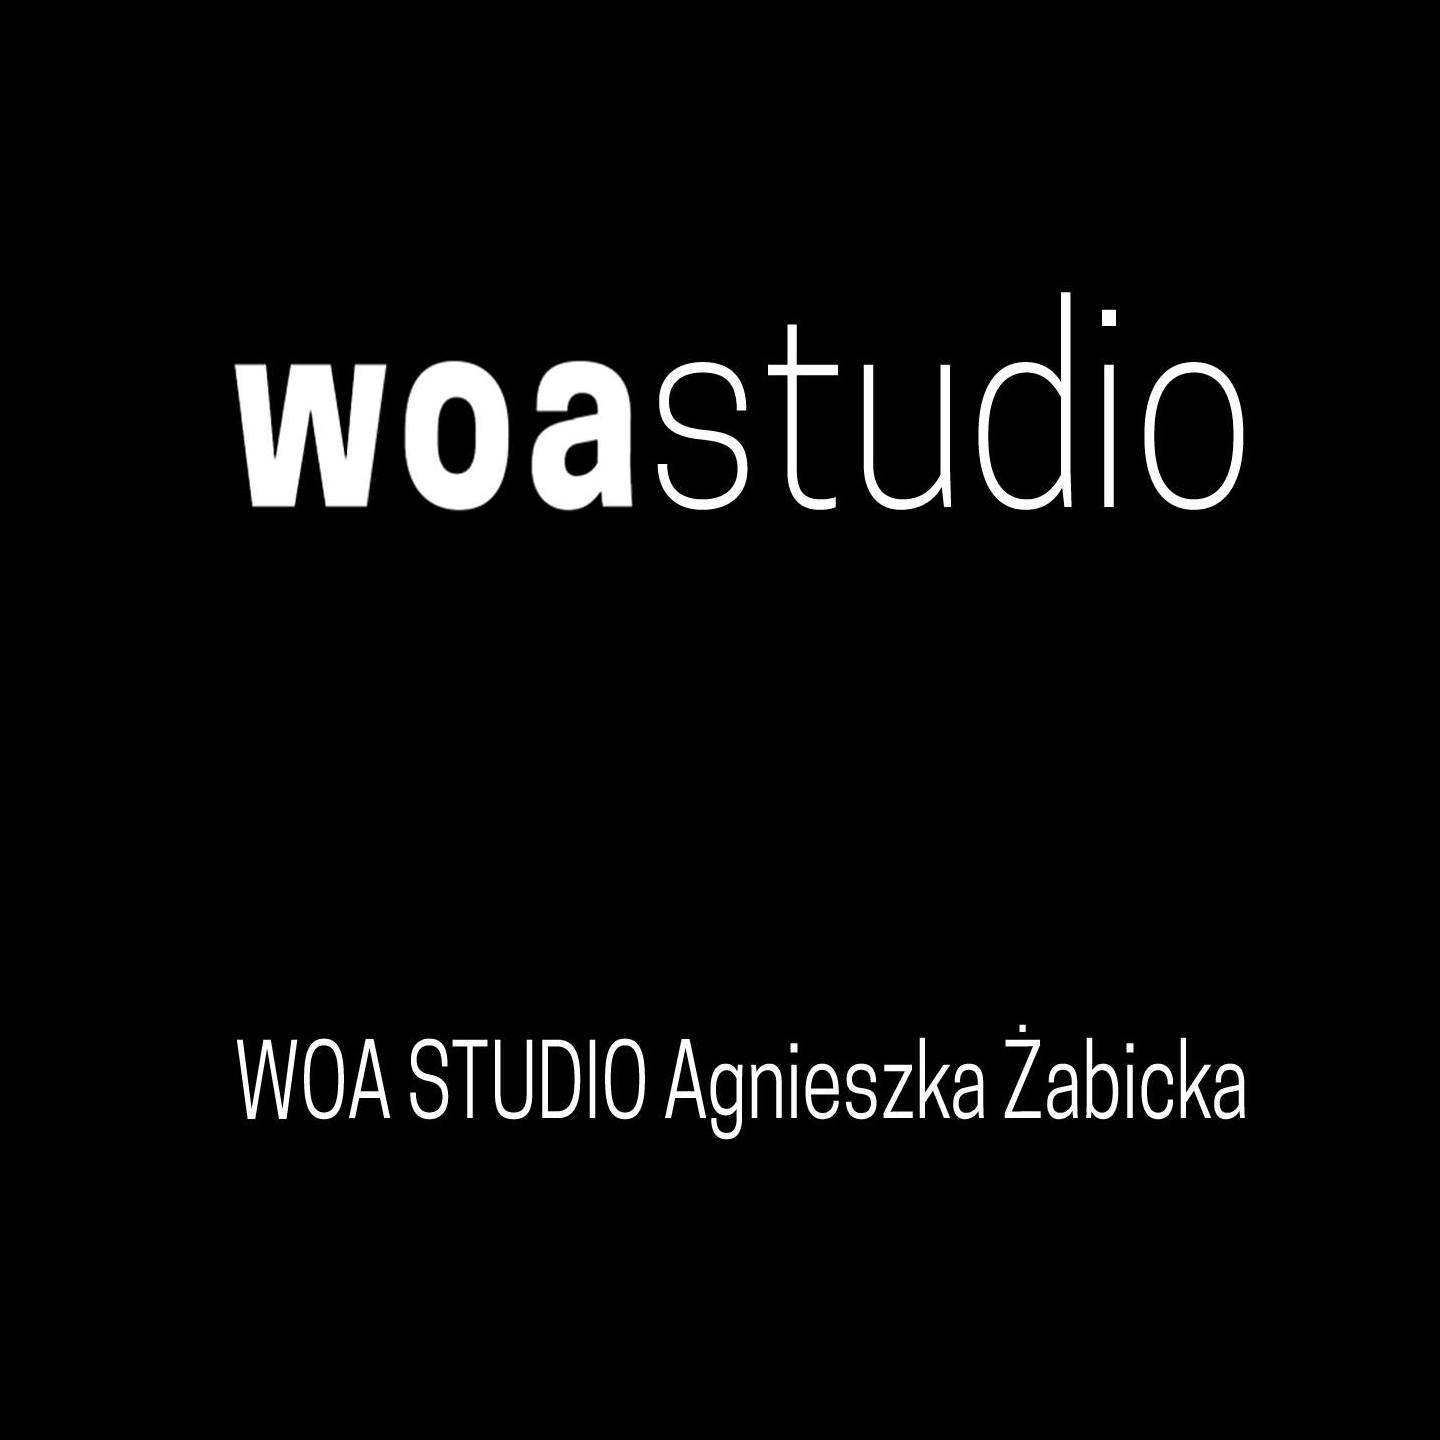 WOA Studio Agnieszka Żabicka